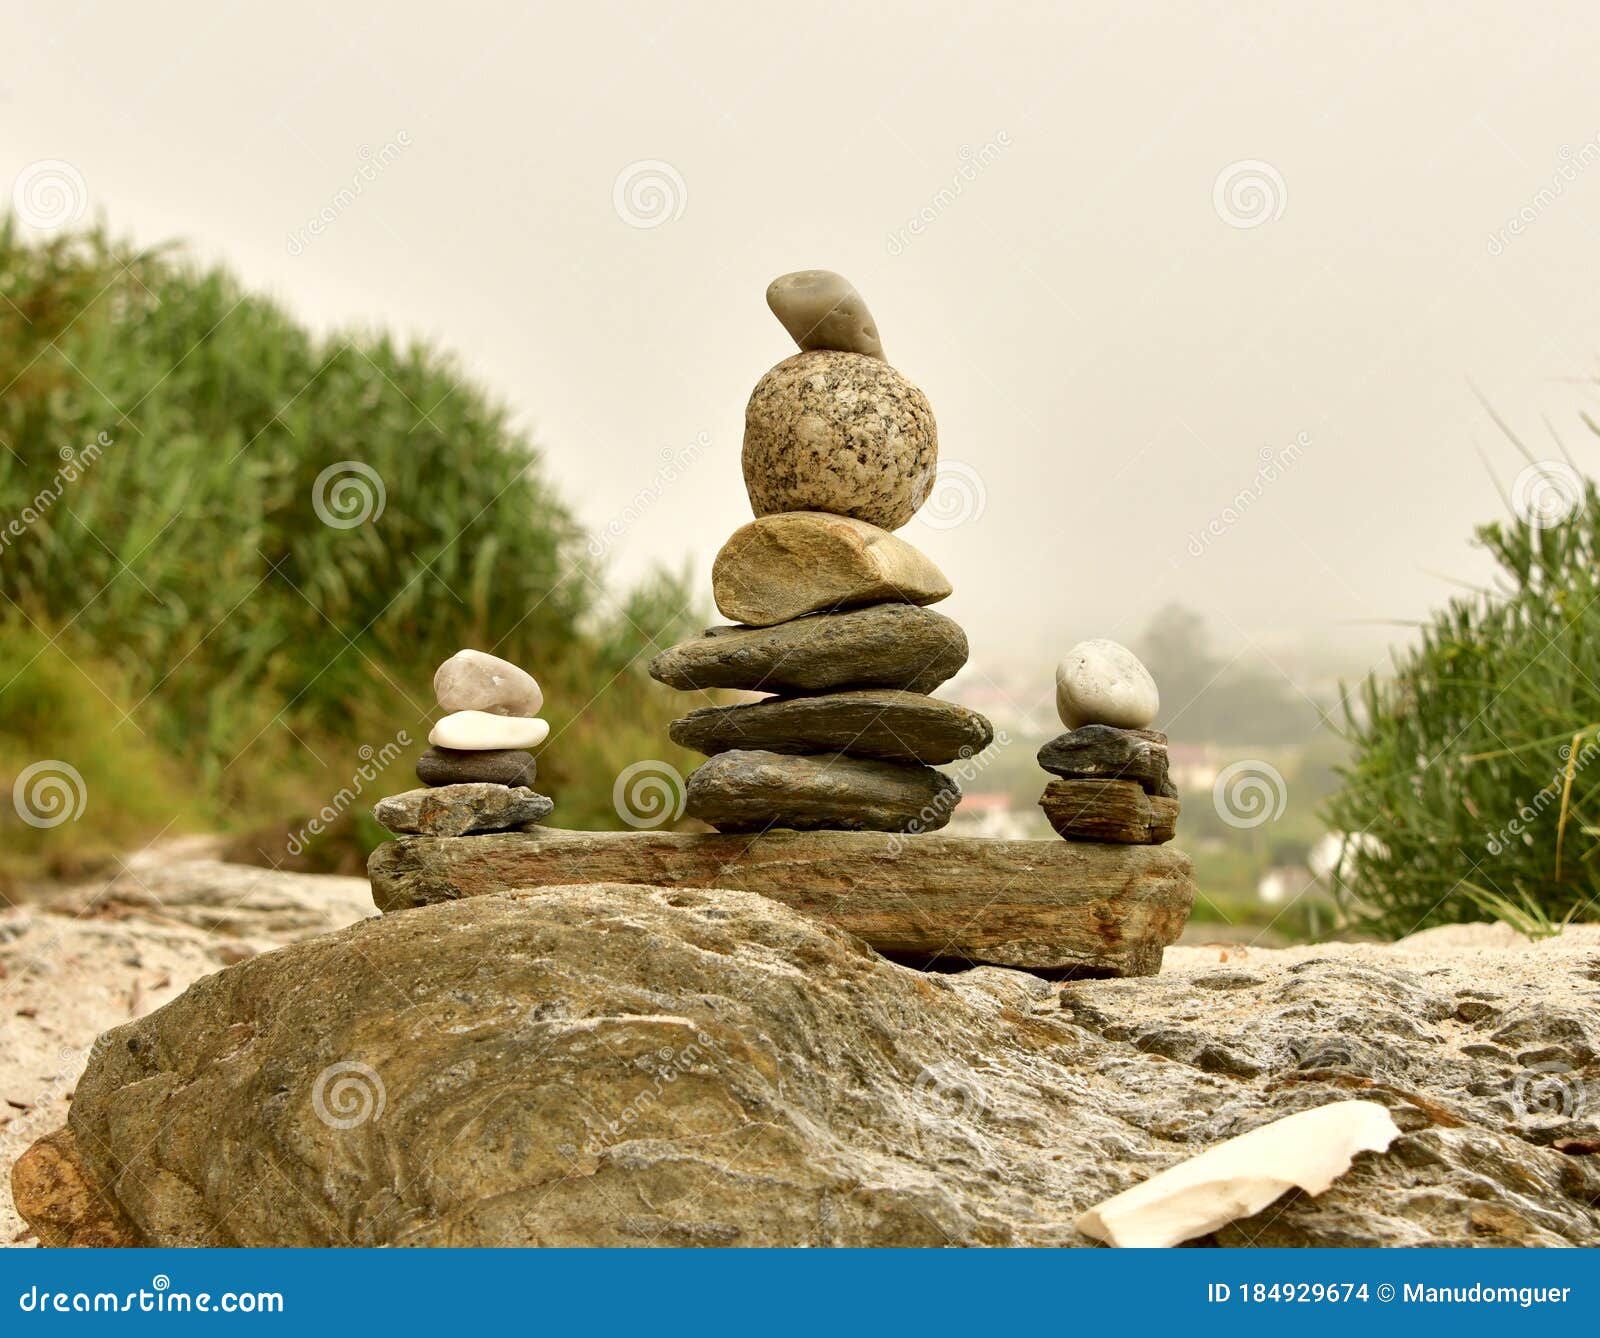 Zen Stones Balance Stones On Stone Stones Balance Pile Of Pebbles On Sand And A Bottom Of Green Vegetation Stock Photo Image Of Beauty Architecture